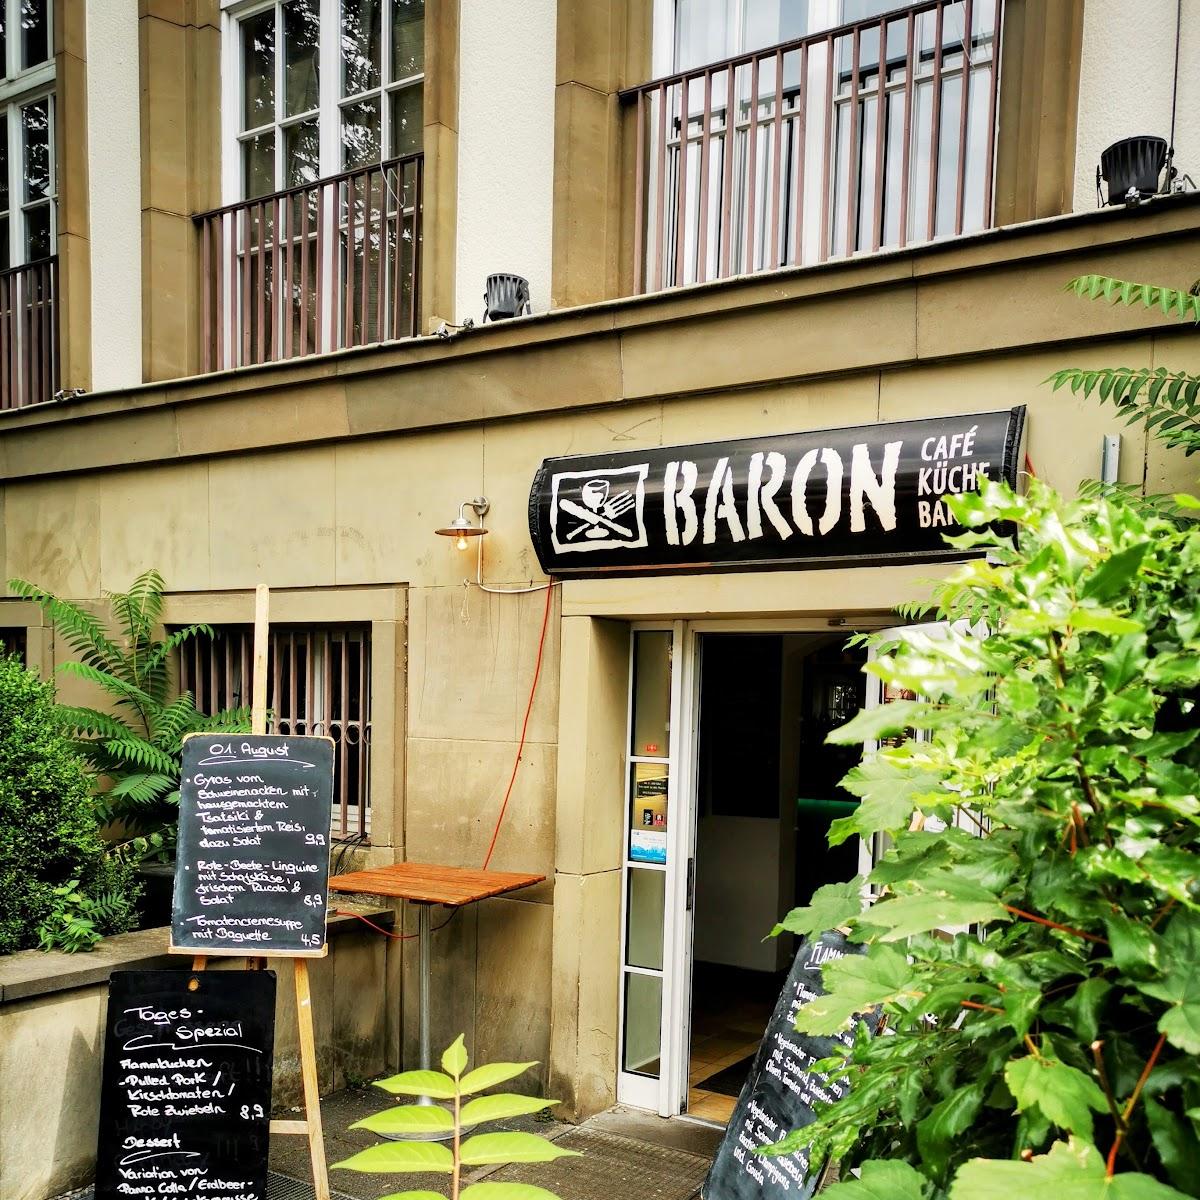 Restaurant "Baron" in Mainz